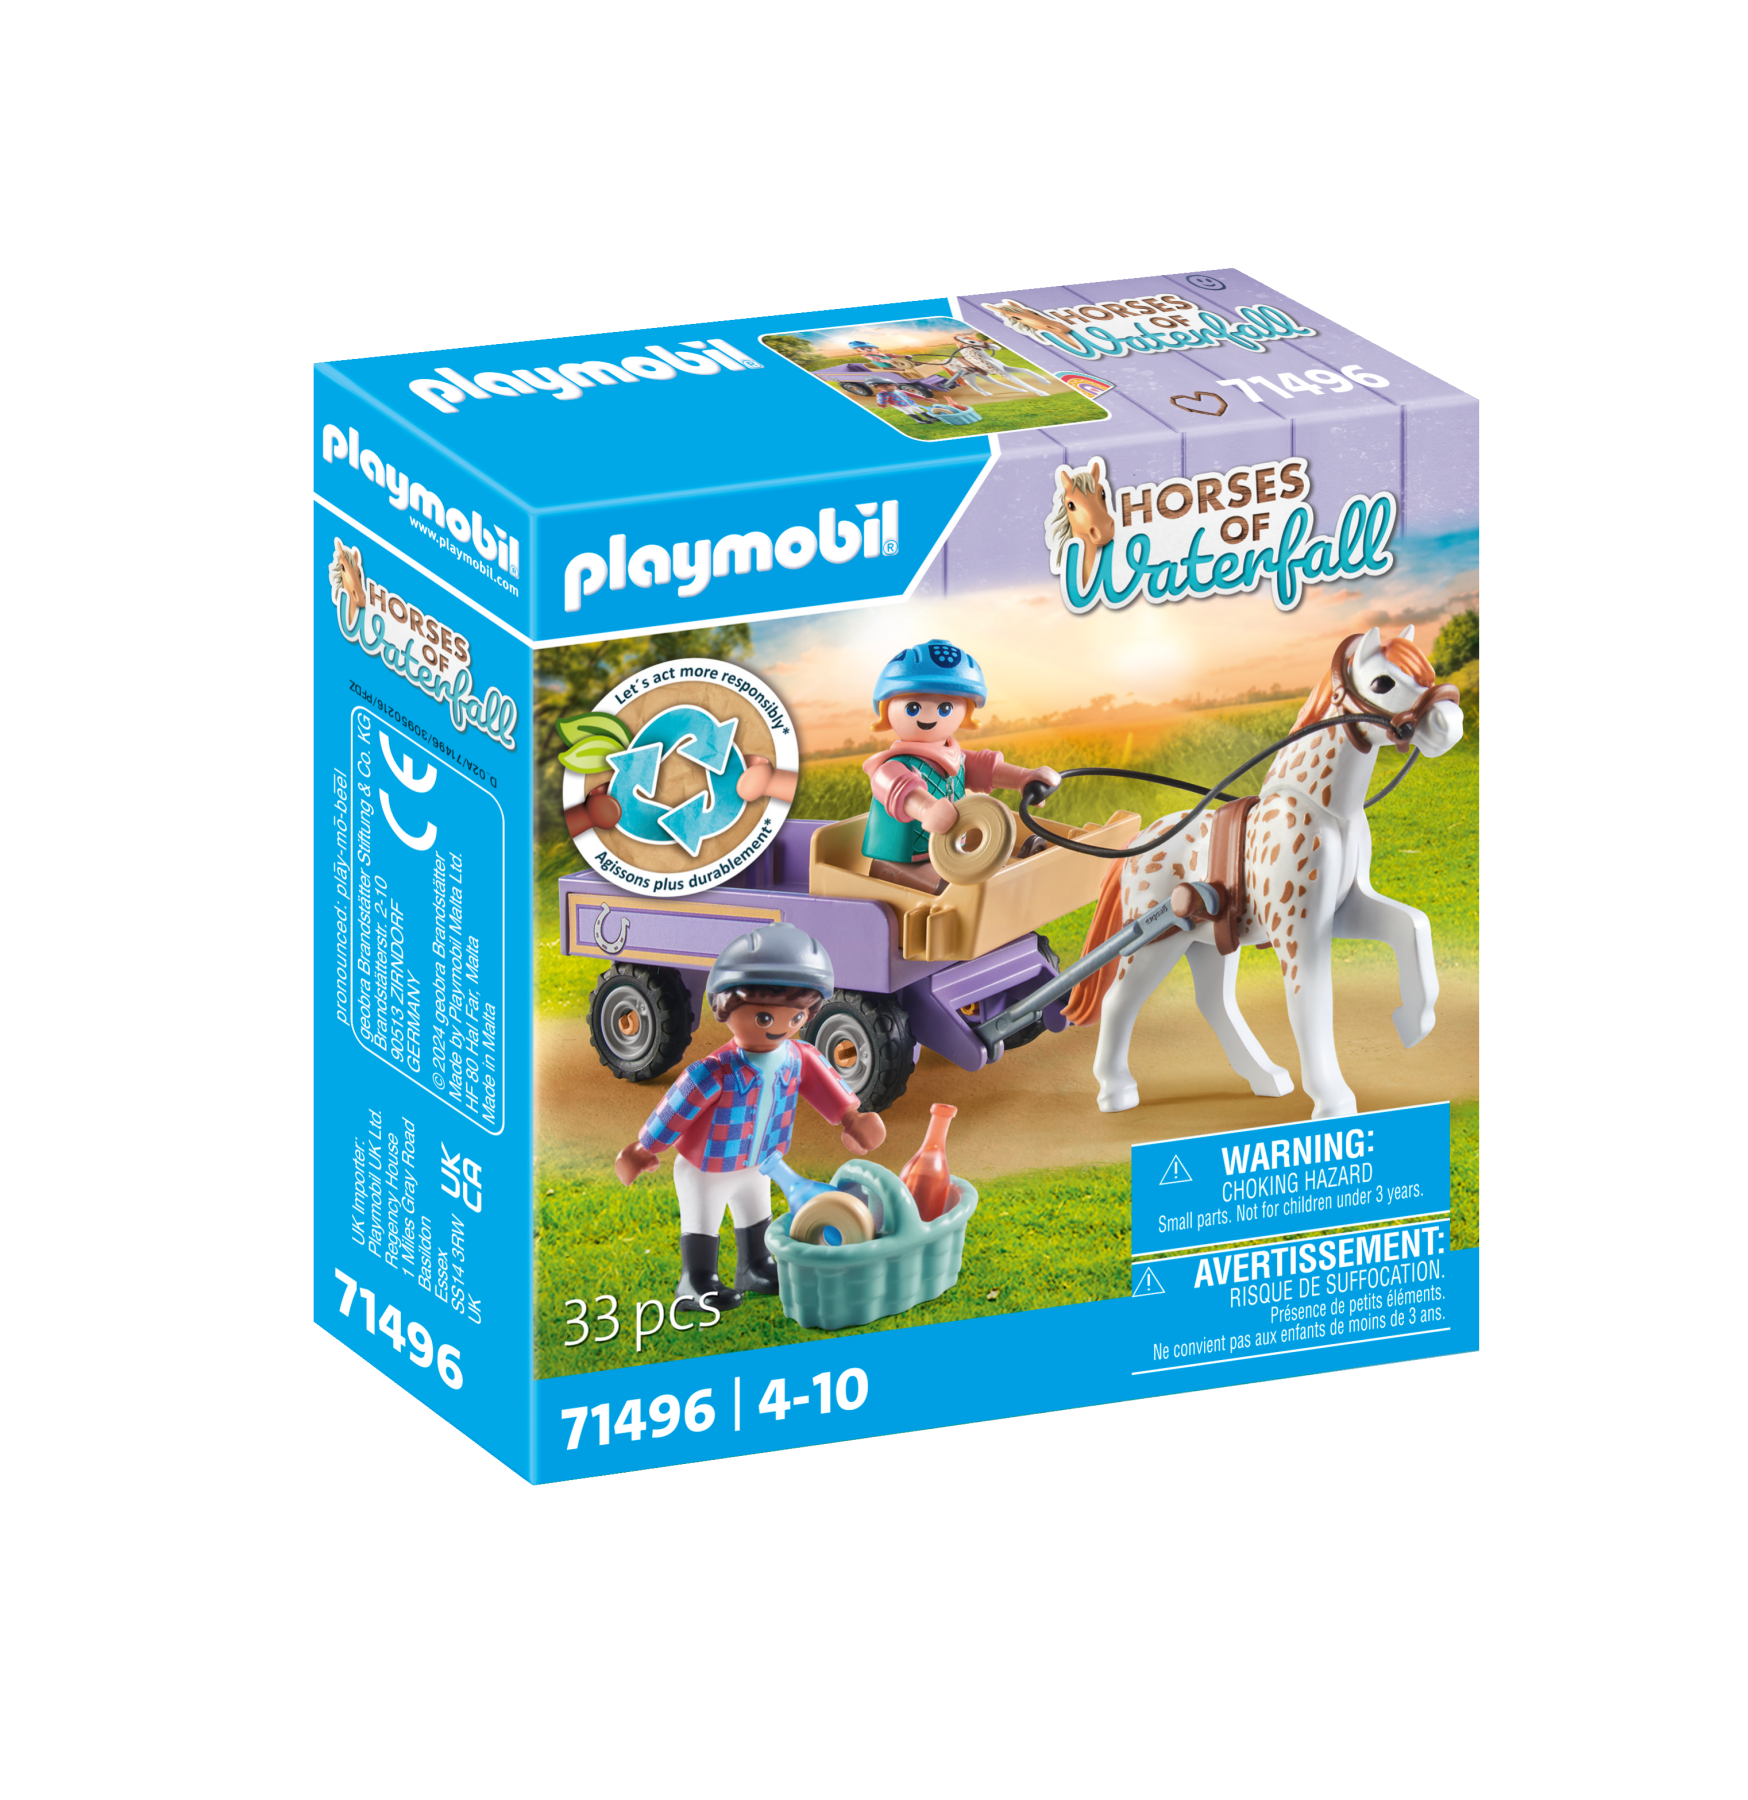 Playmobil horse of waterfall 71496  carrozza con pony per bambini dai 4 anni - Playmobil